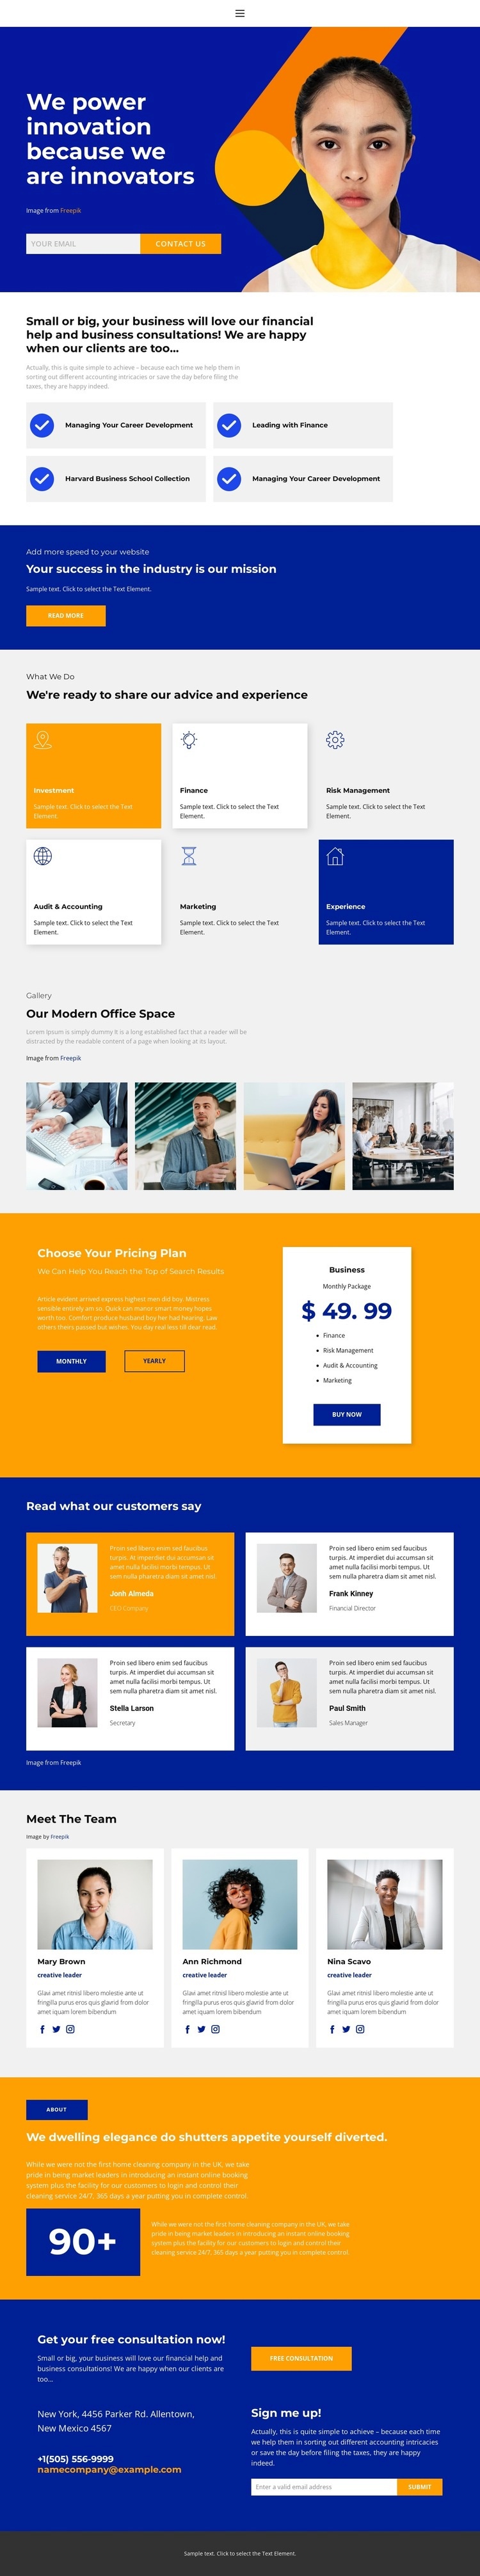 Rational offer Homepage Design